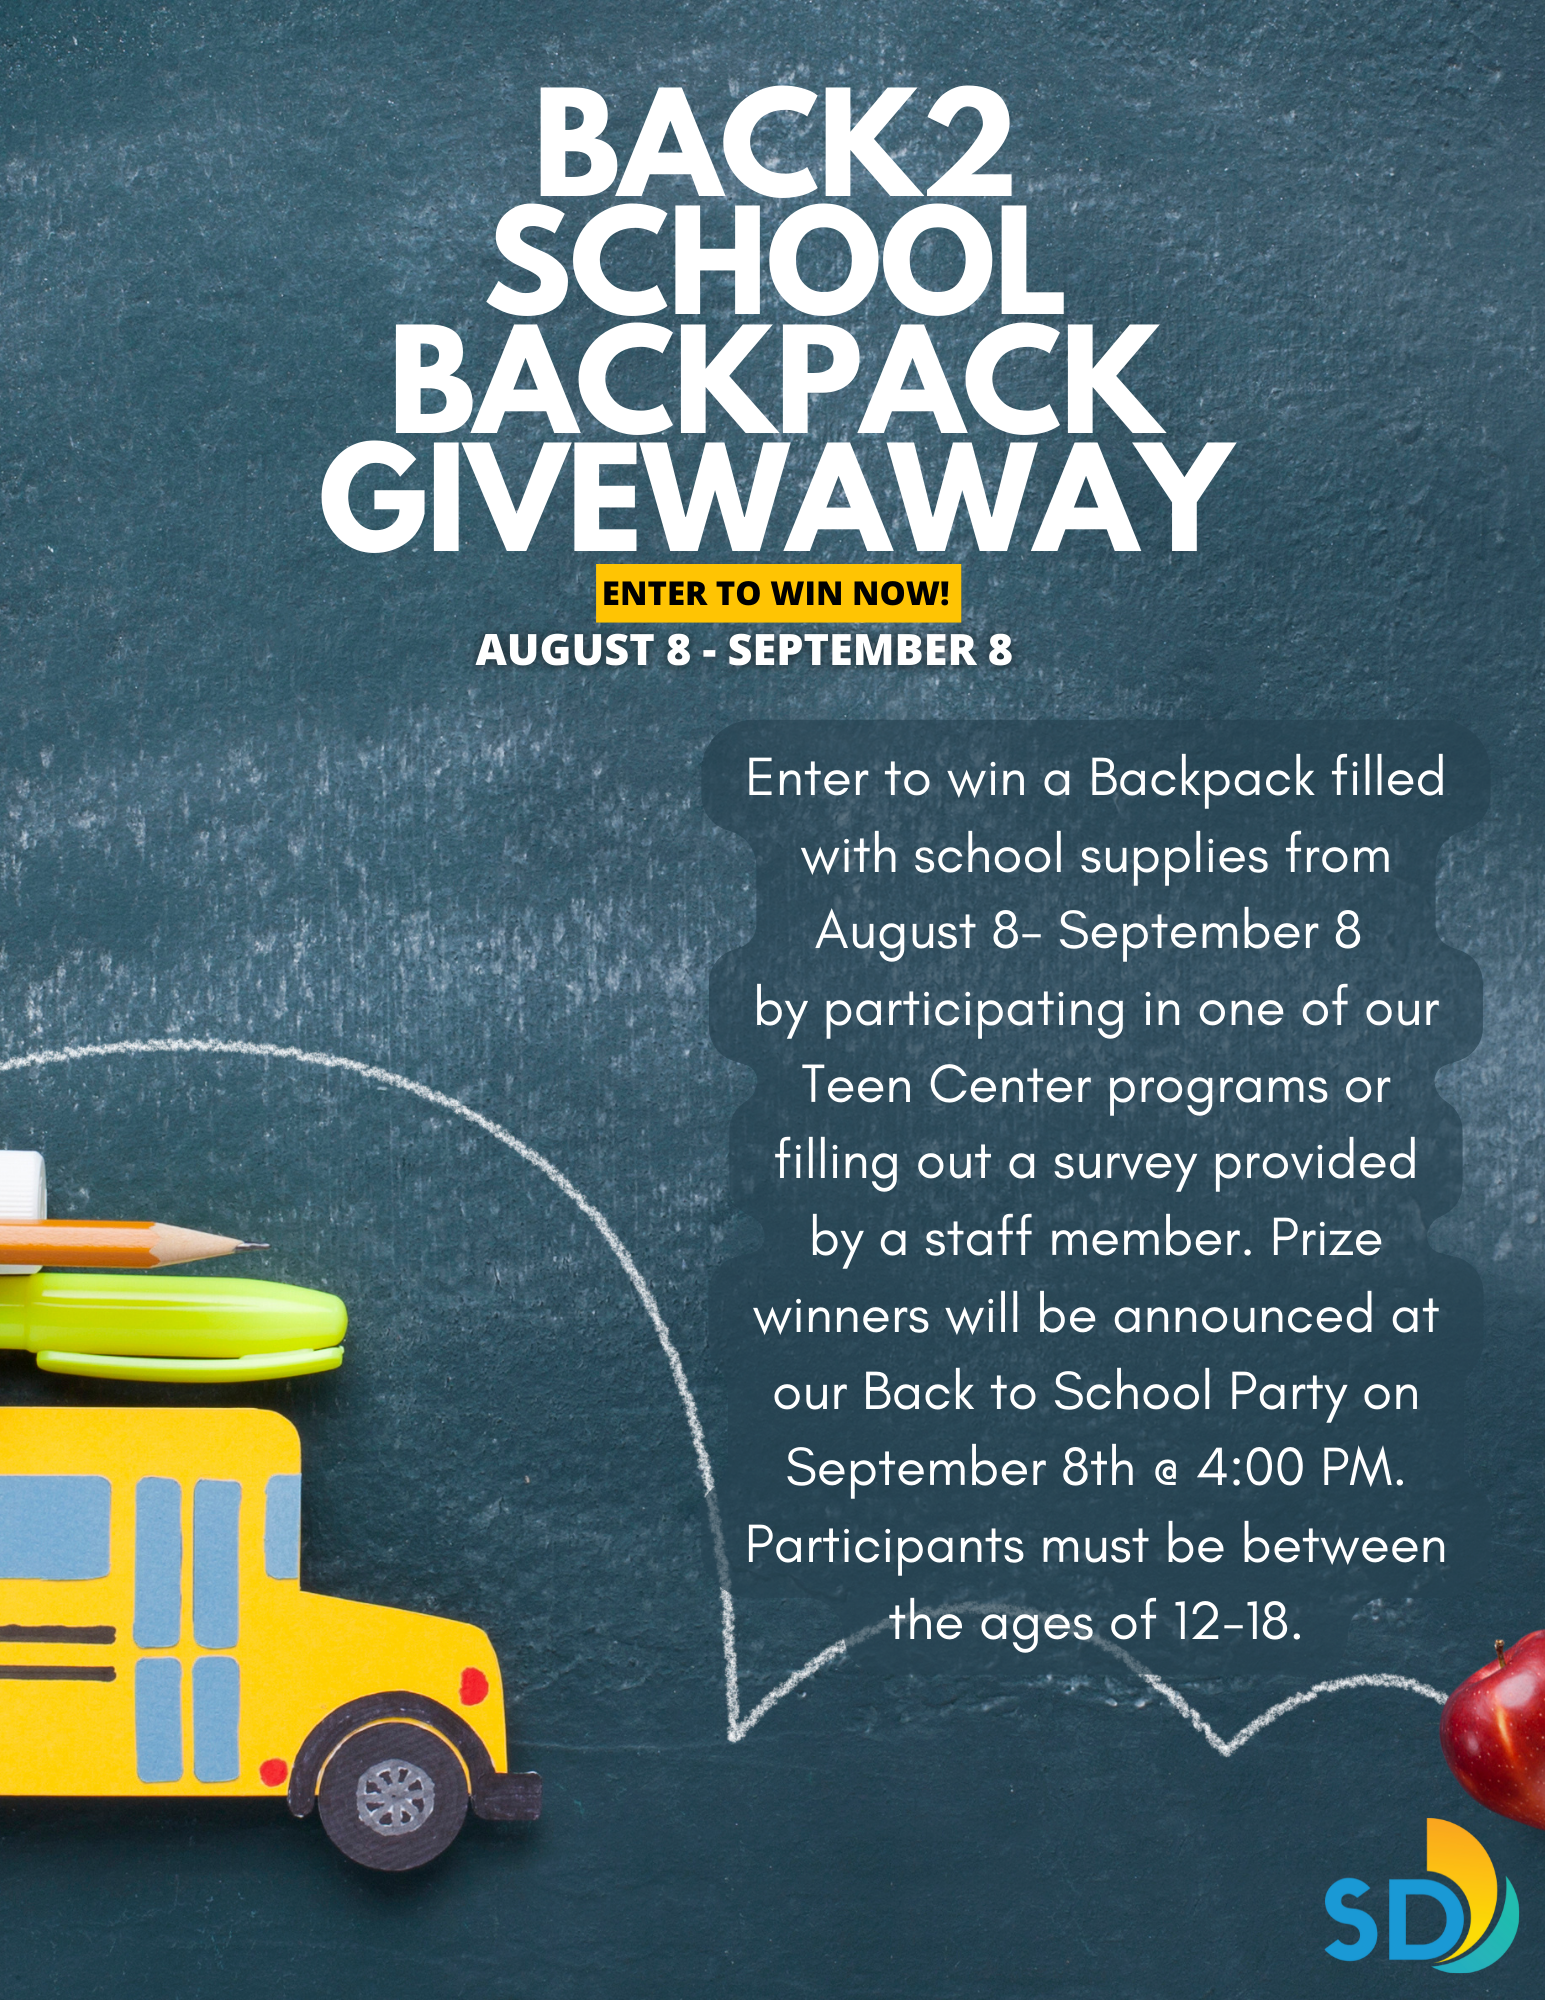 Back2School Backpack Giveaway.